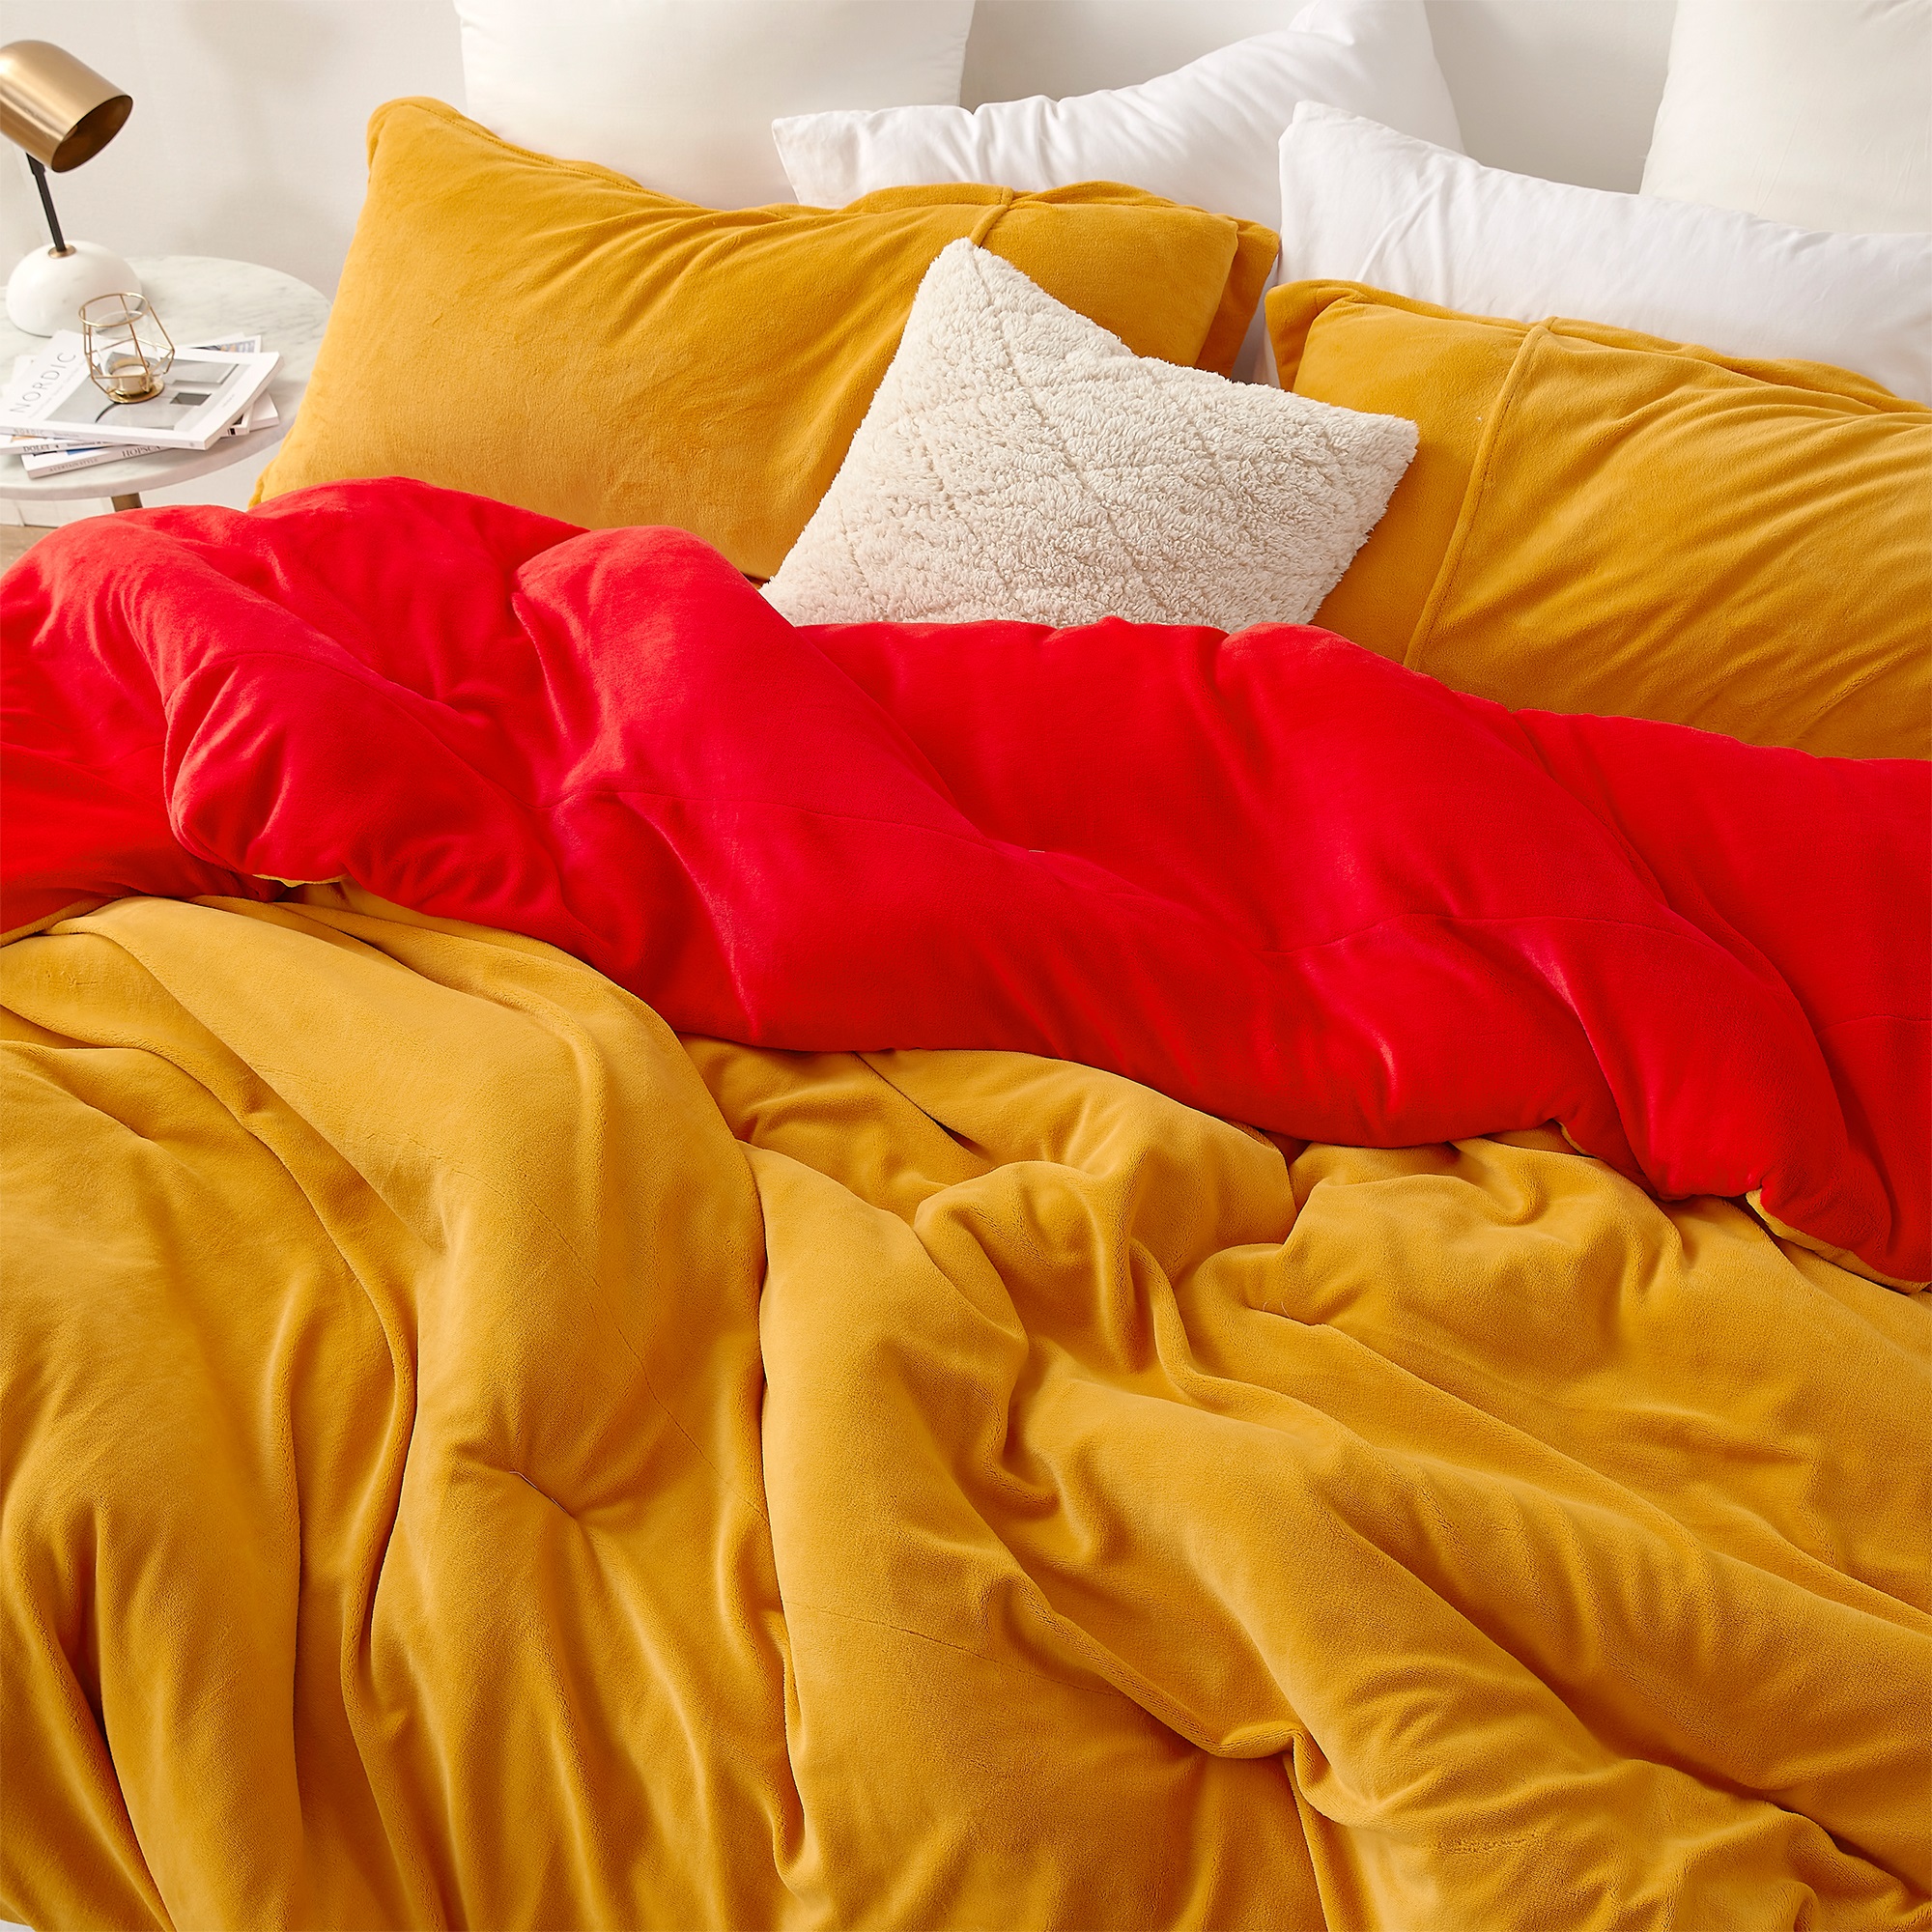 Even Heroes Need Sleep - Coma Inducer Oversized Comforter - Inferno